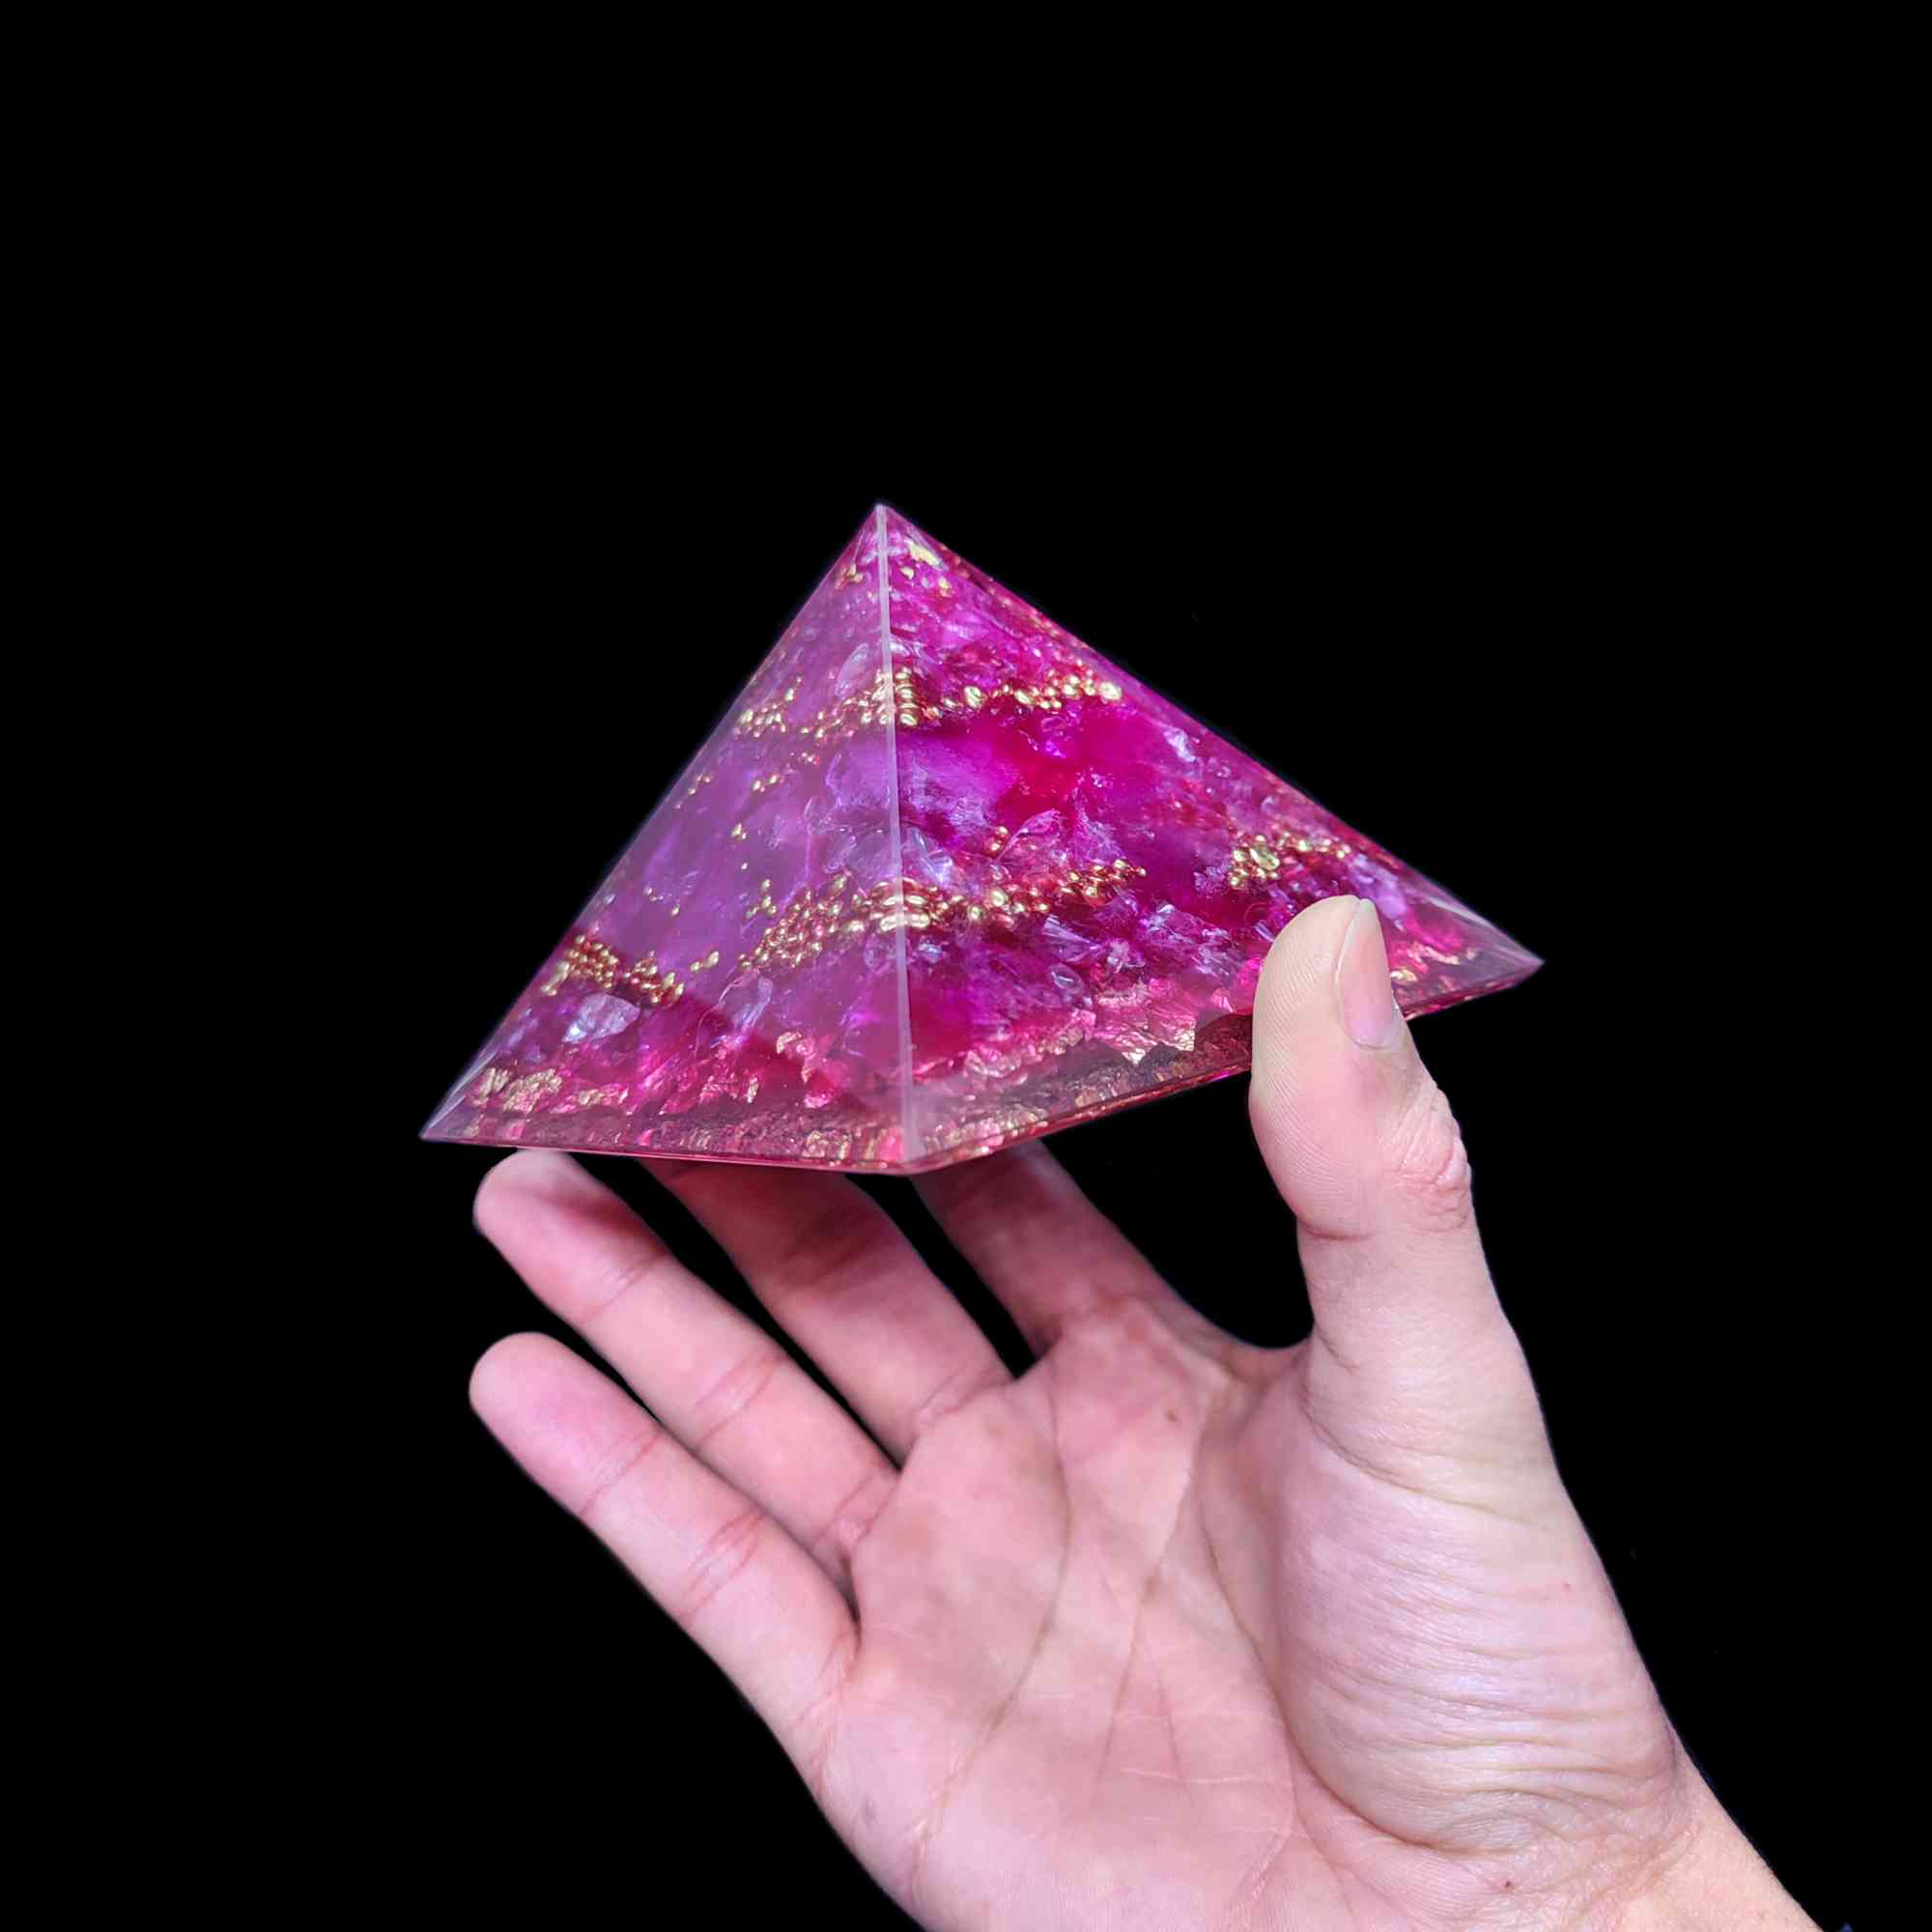 Edelstein Orgonit Pyramide mit Pinkem Saphir & goldenen Metall-Elementen.